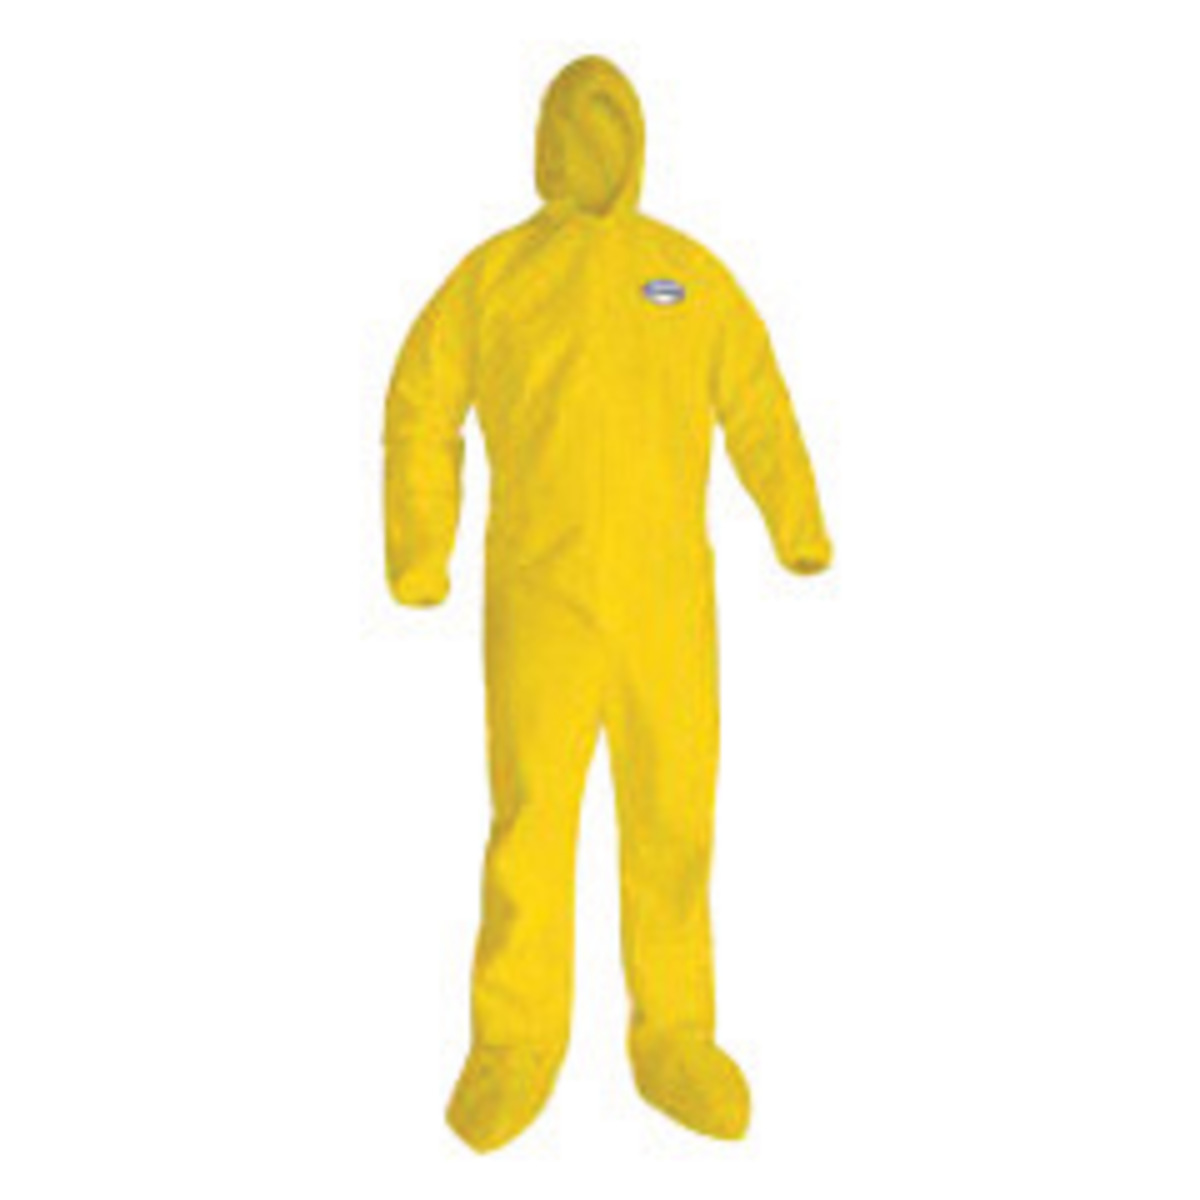 Kimberly-Clark Professional* Large Yellow KleenGuard* A70 1.5 mil Polpropylene/Polyethylene Coveralls (Availability restrictions